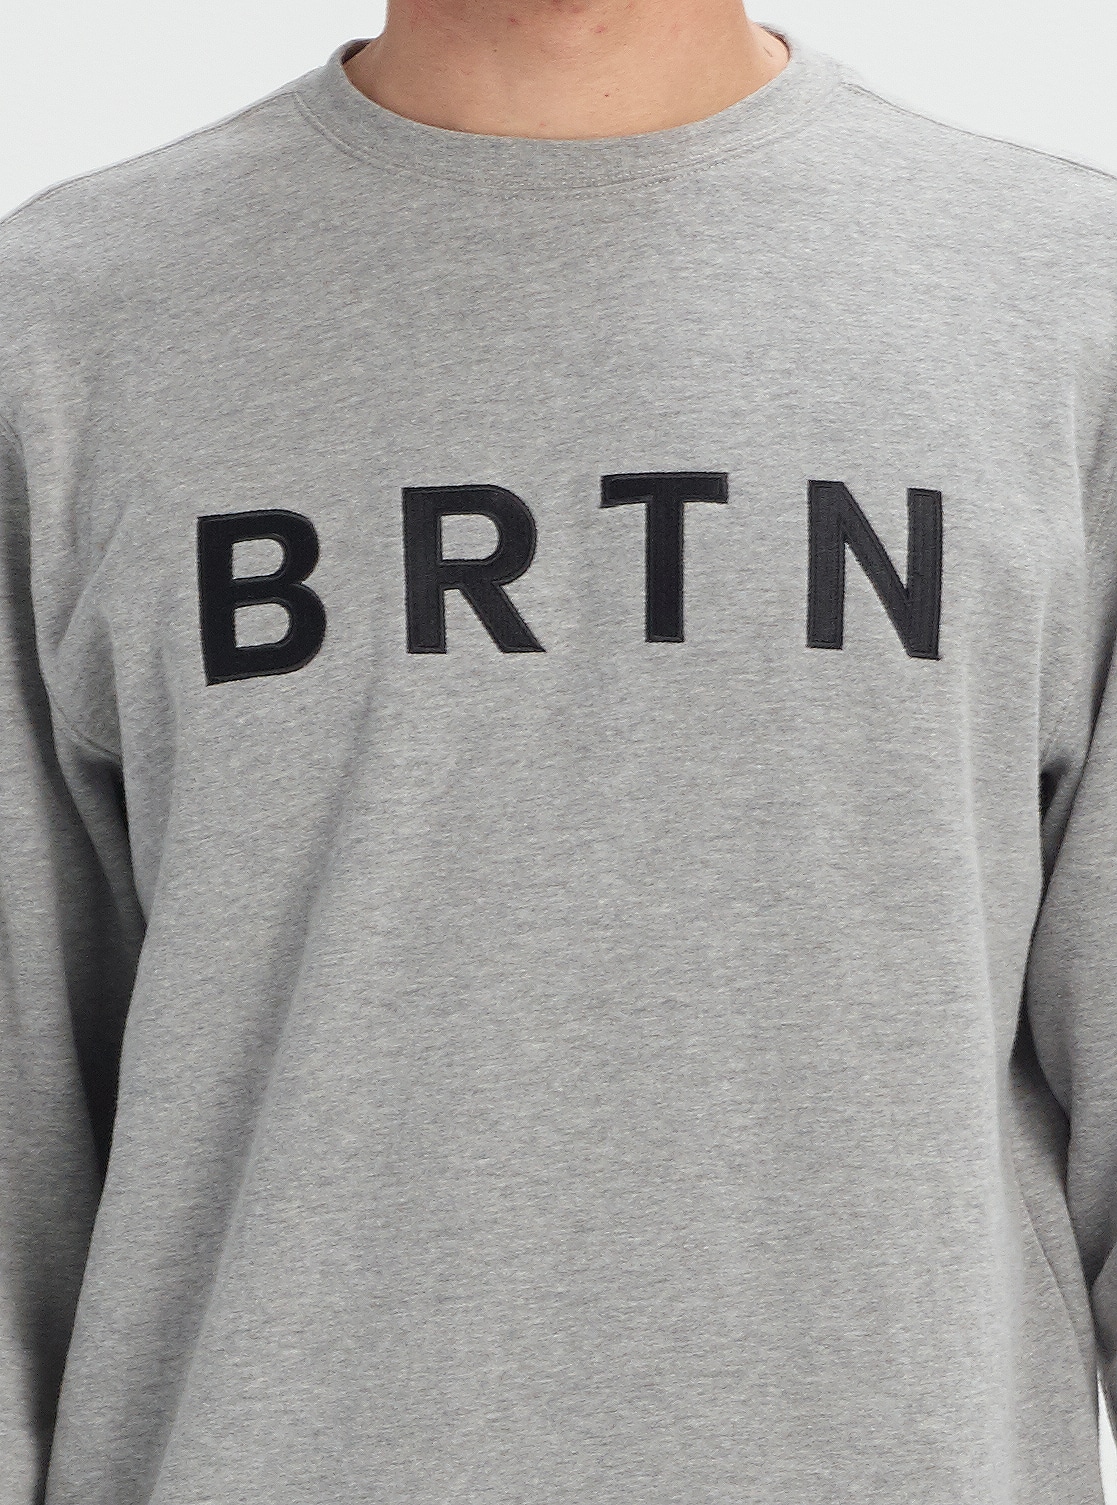 Martini Olive Burton Herren Brtn Sweatshirt XL 